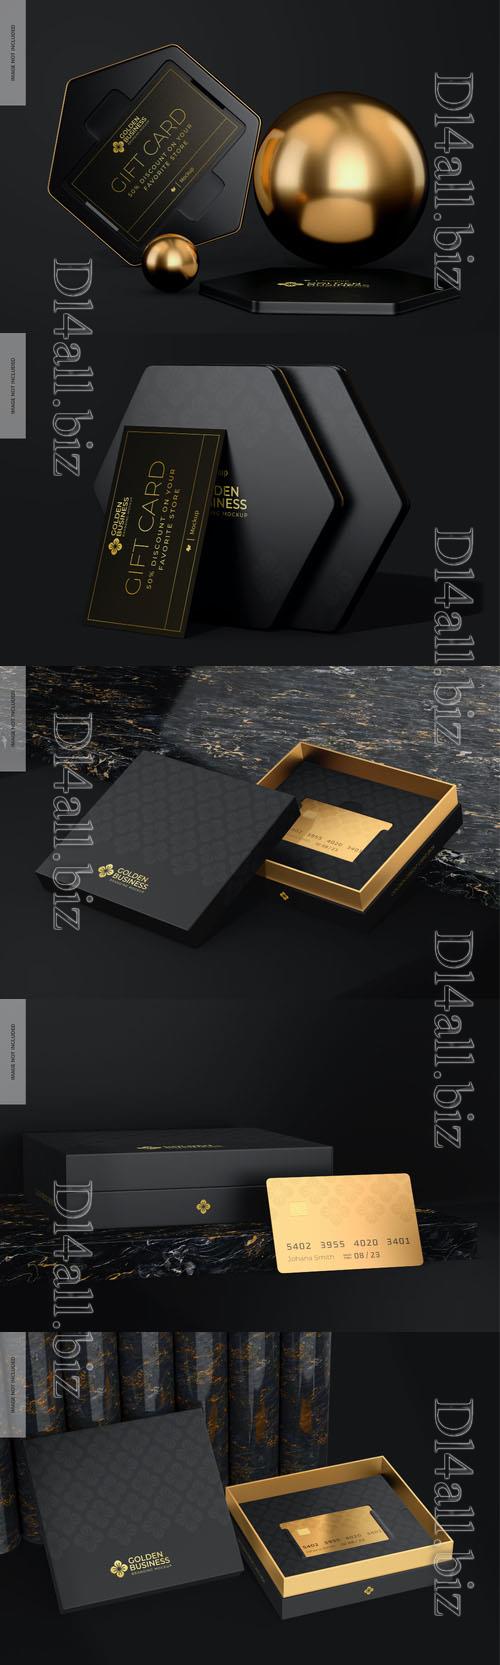 Golden credit card box psd template mockup design